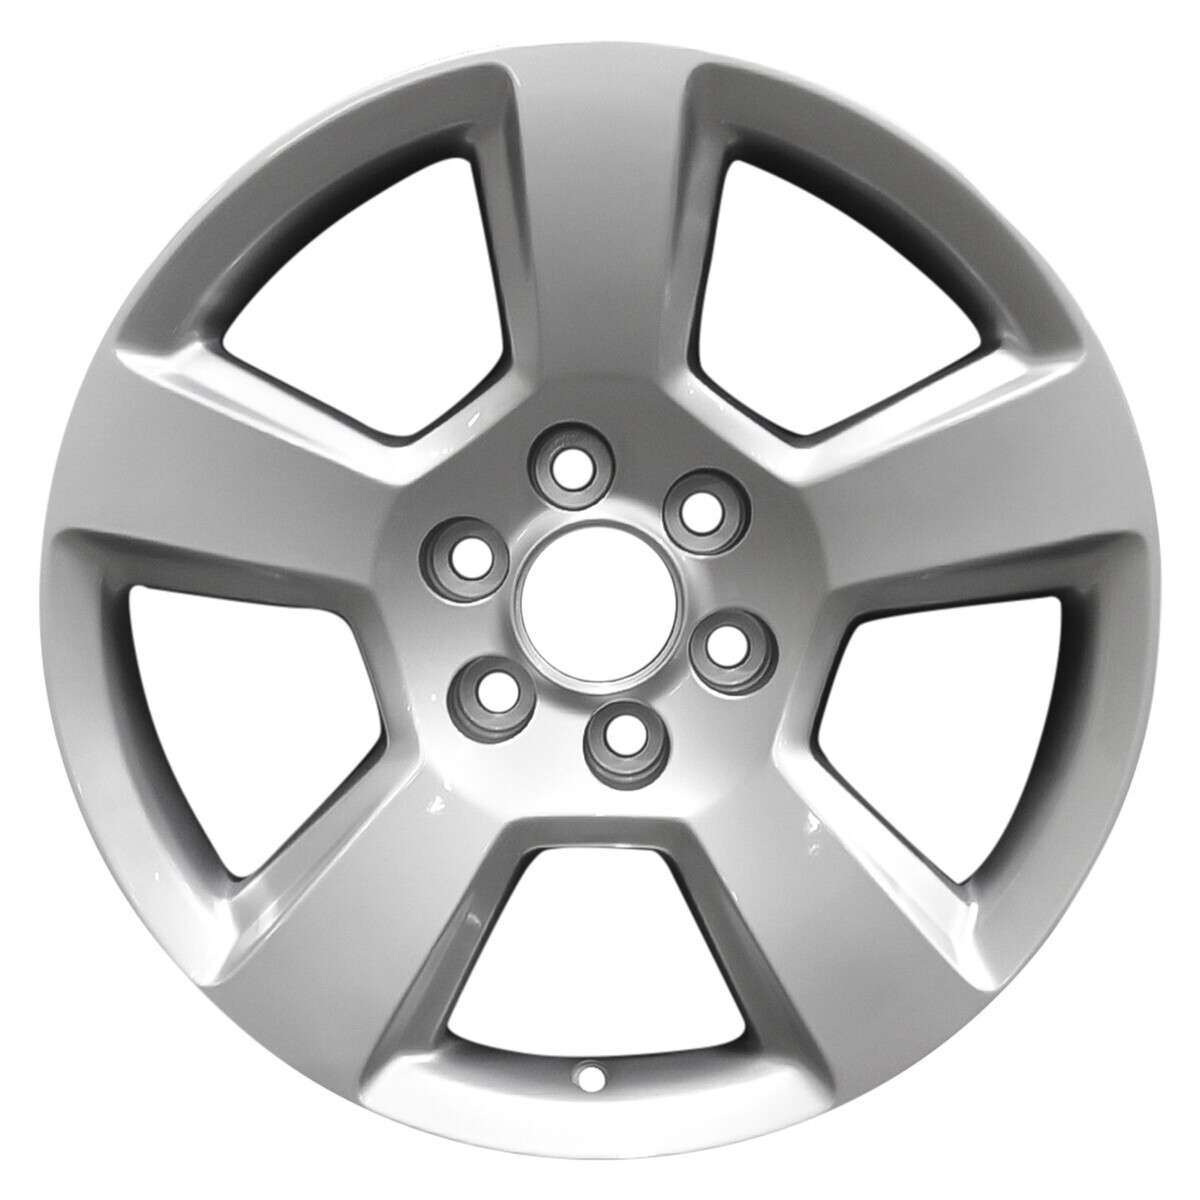 2014 Chevrolet Silverado 1500 New 20" Replacement Wheel Rim RW5754S